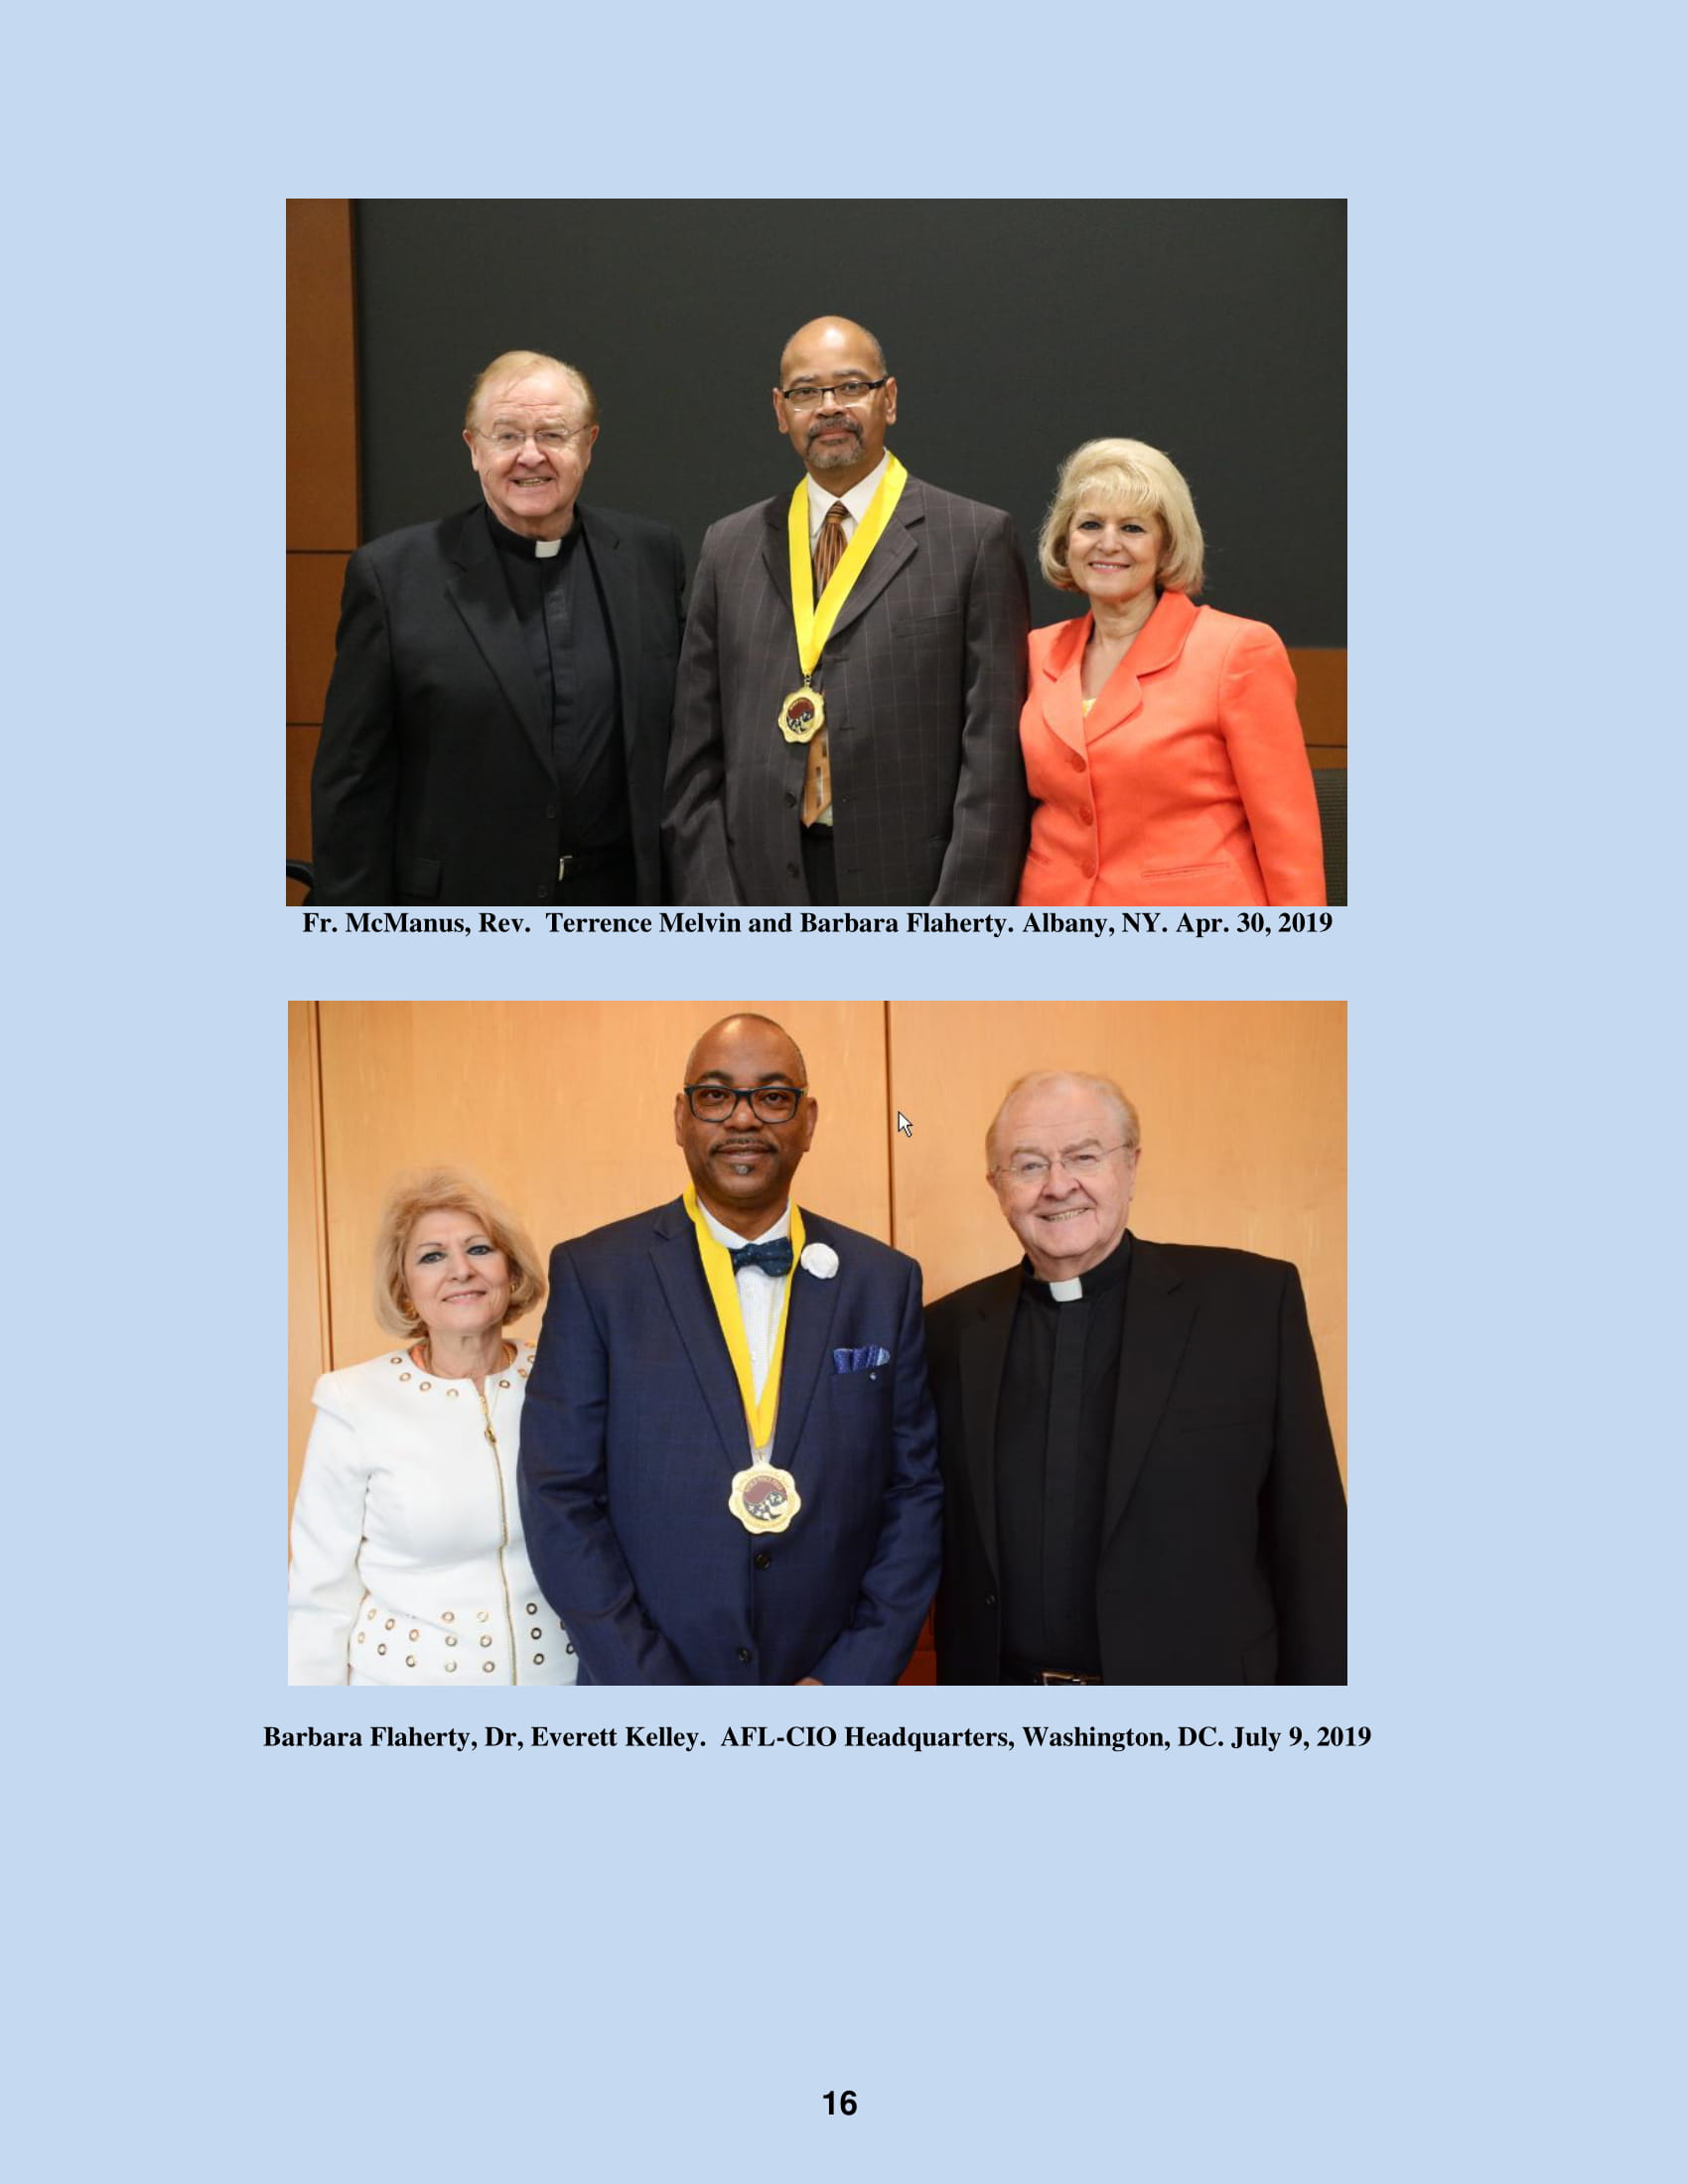 Fr. McManus, Rev. Terrence Melvin and Barbara Flaherty. Albany, NY